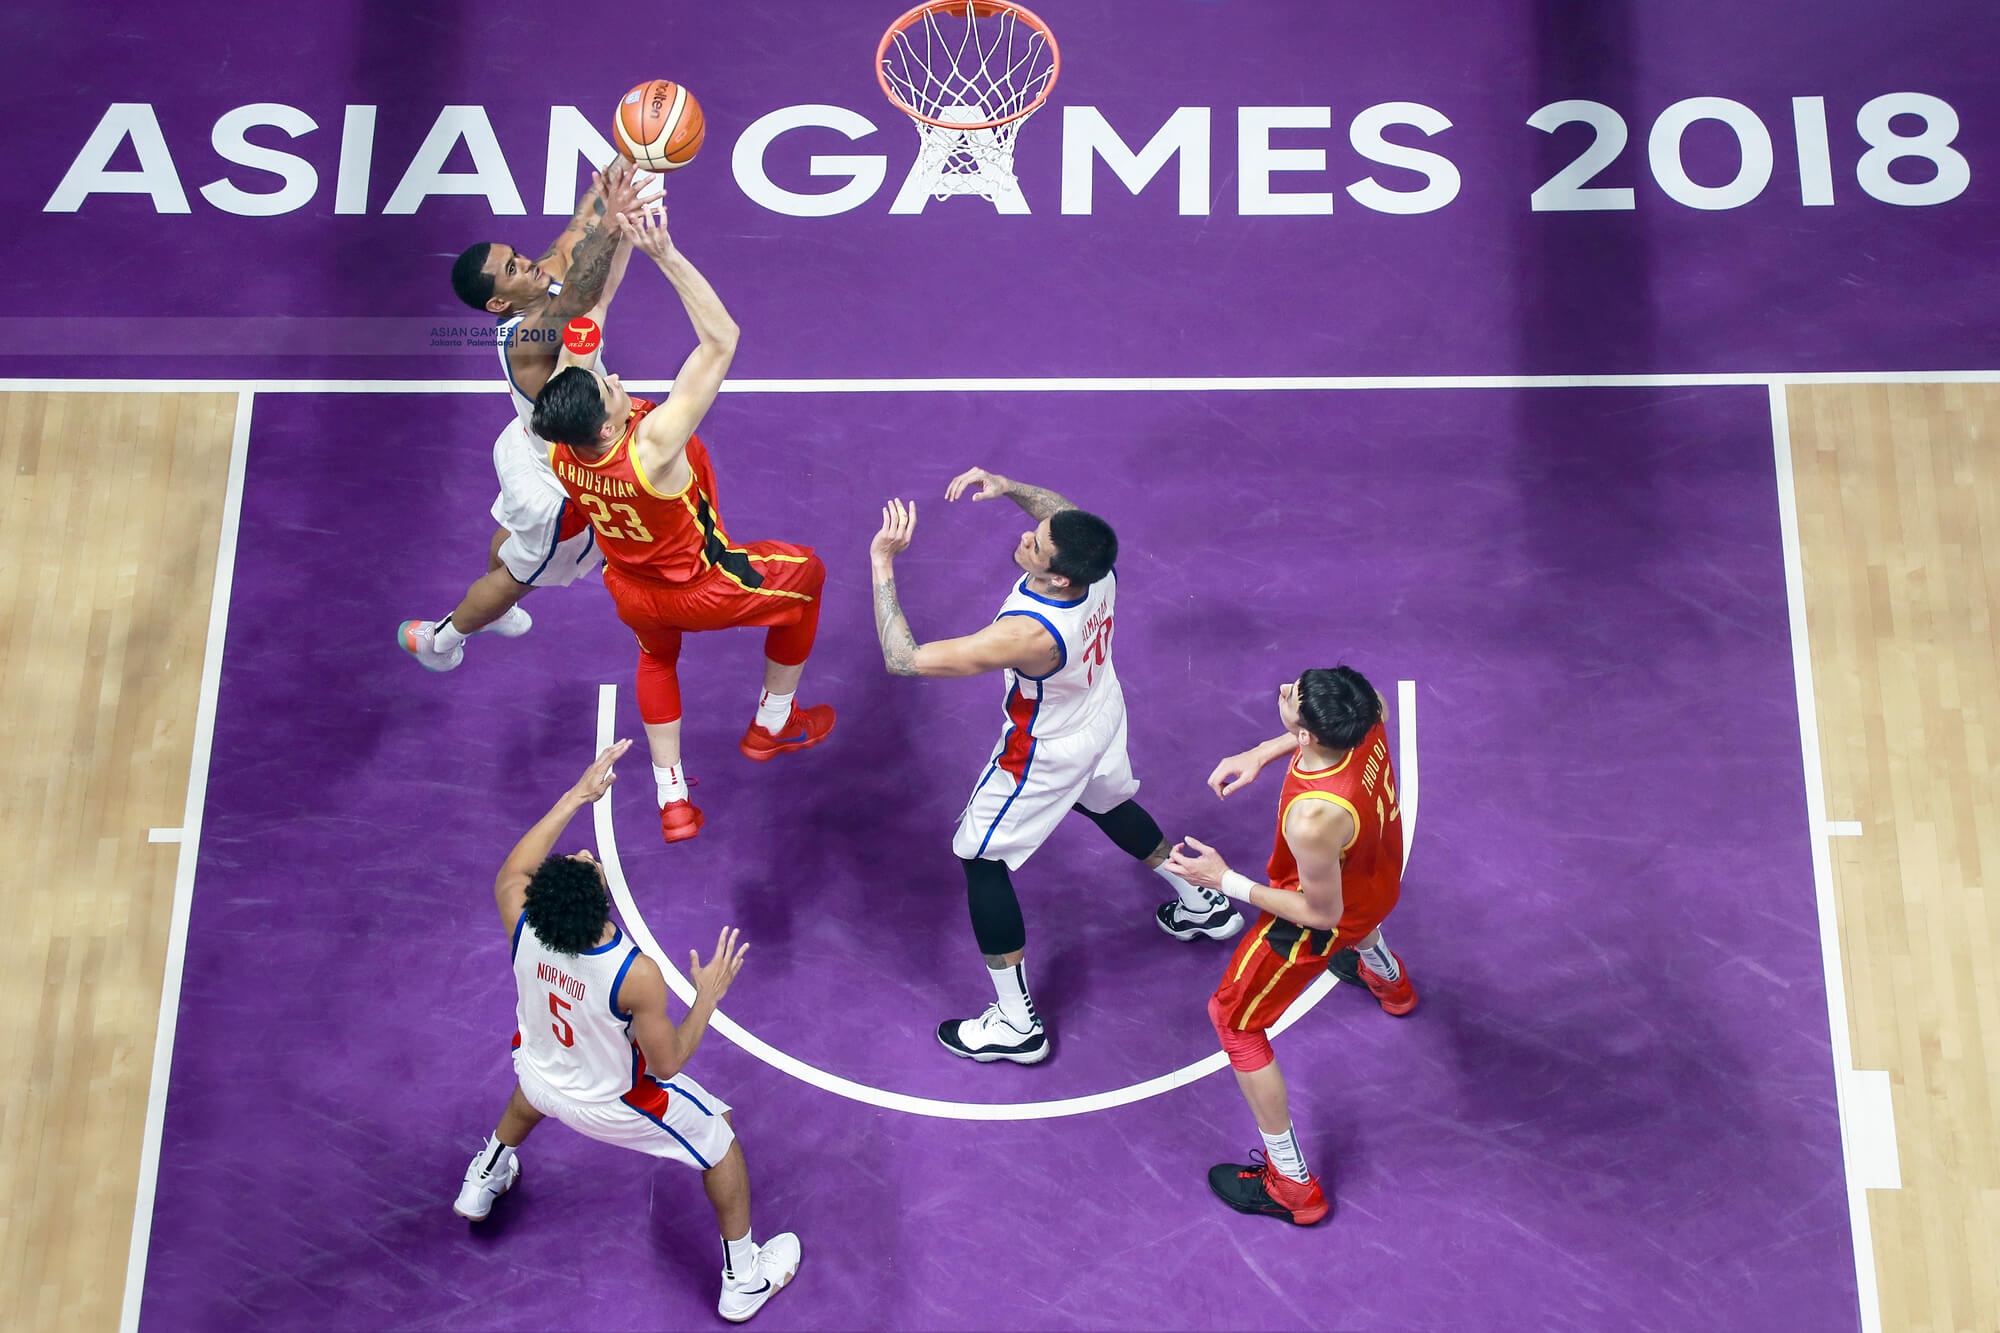 Asian Games 2018 Basketball – Raymond Almazan